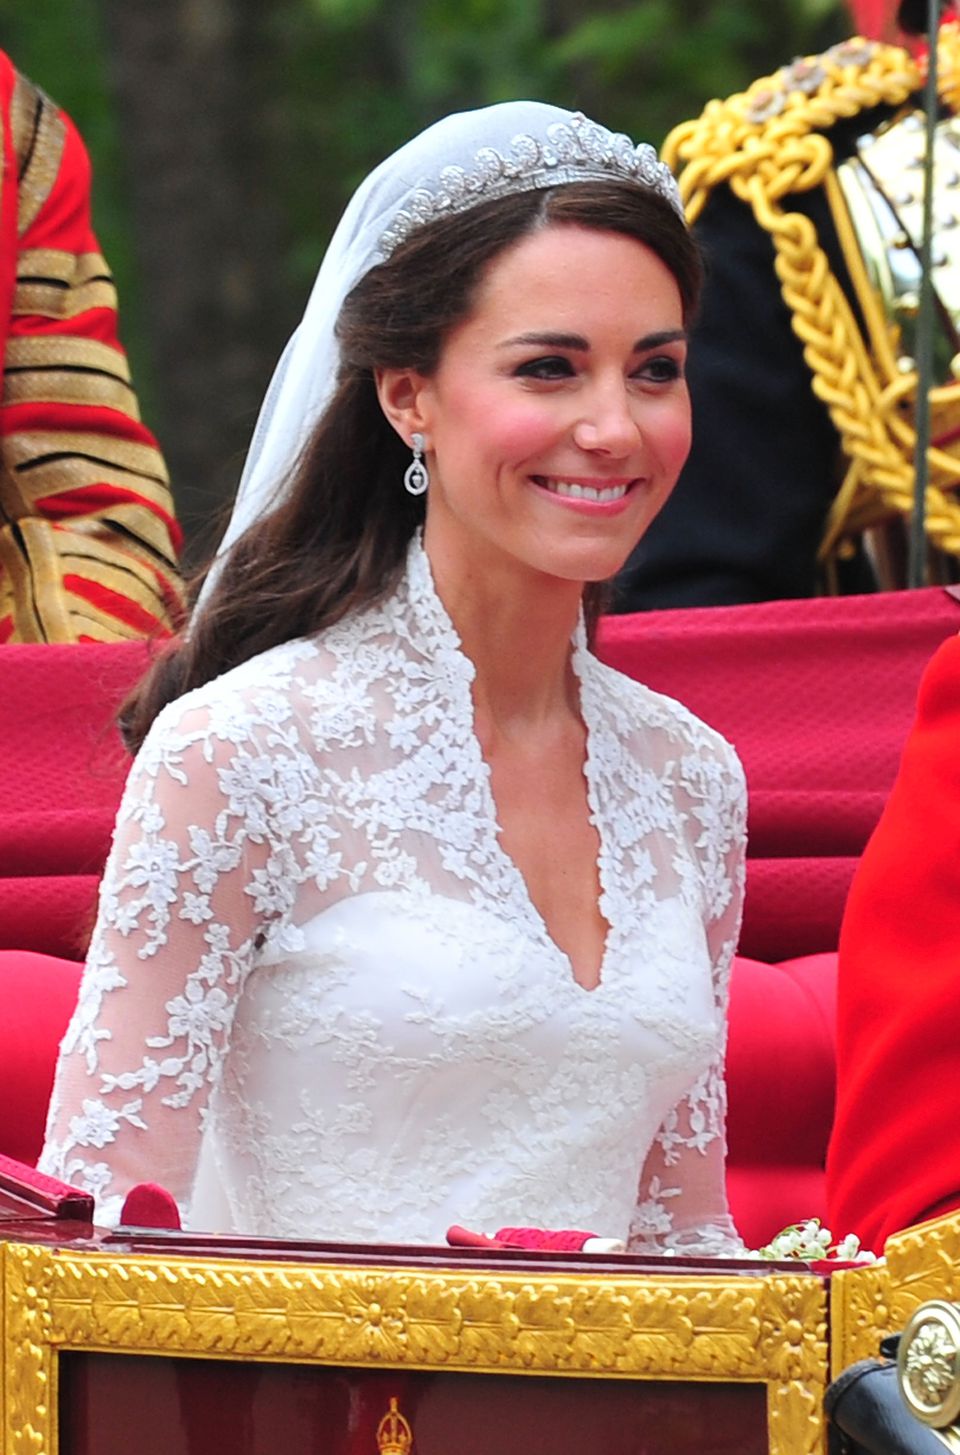 Prince William and Kate Middleton's Wedding Photos